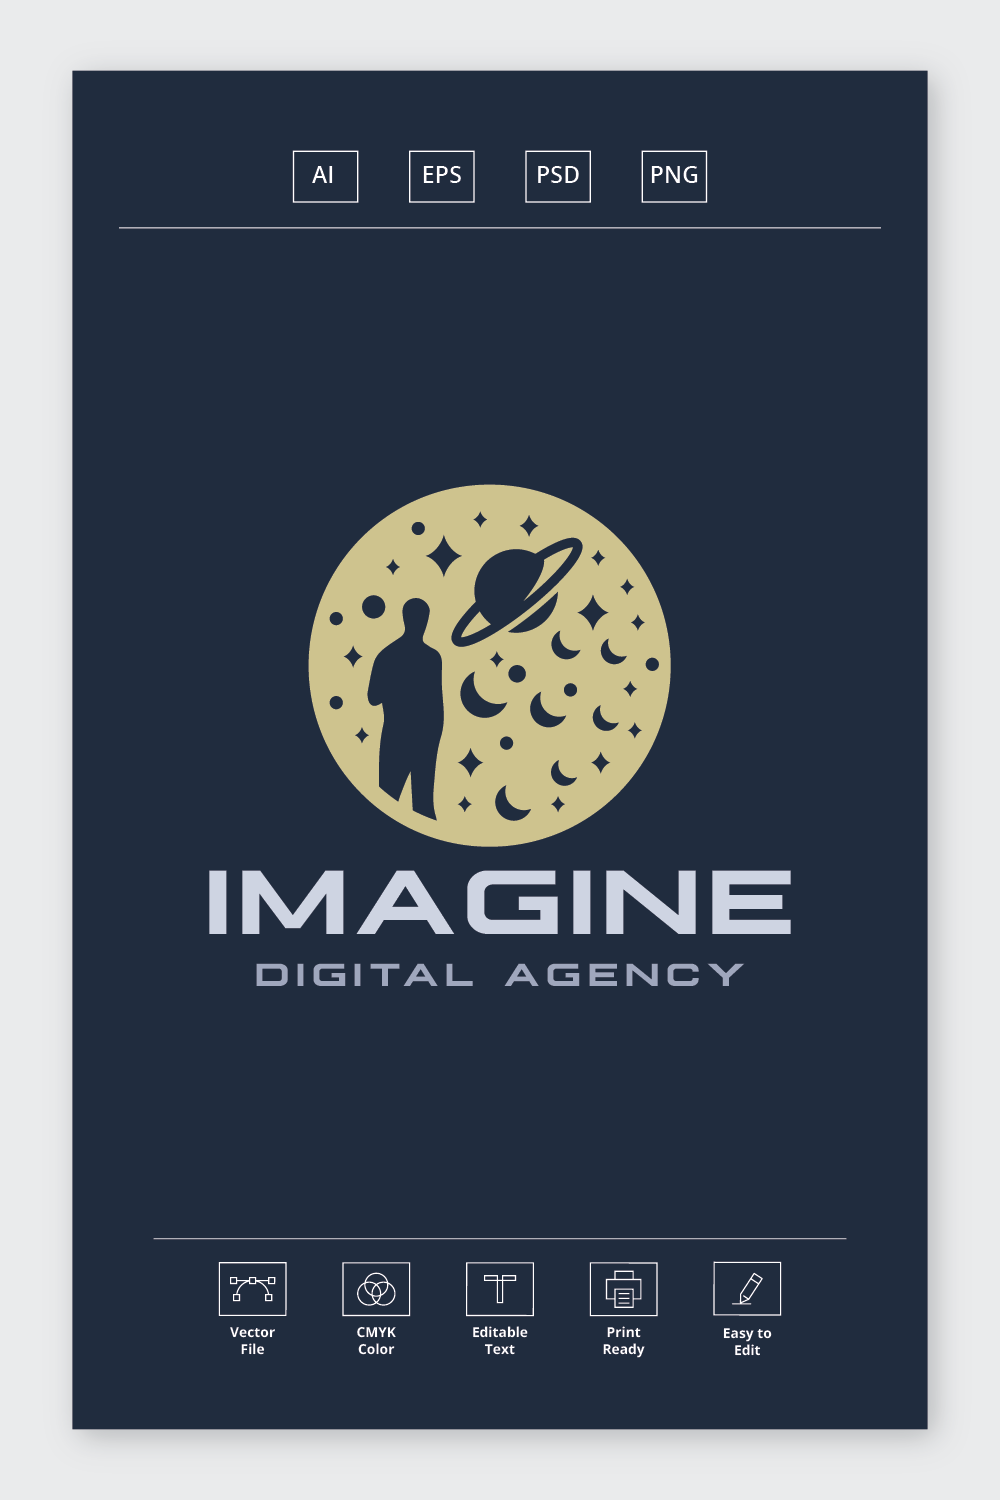 Imagine Digital Agency Logo pinterest preview image.